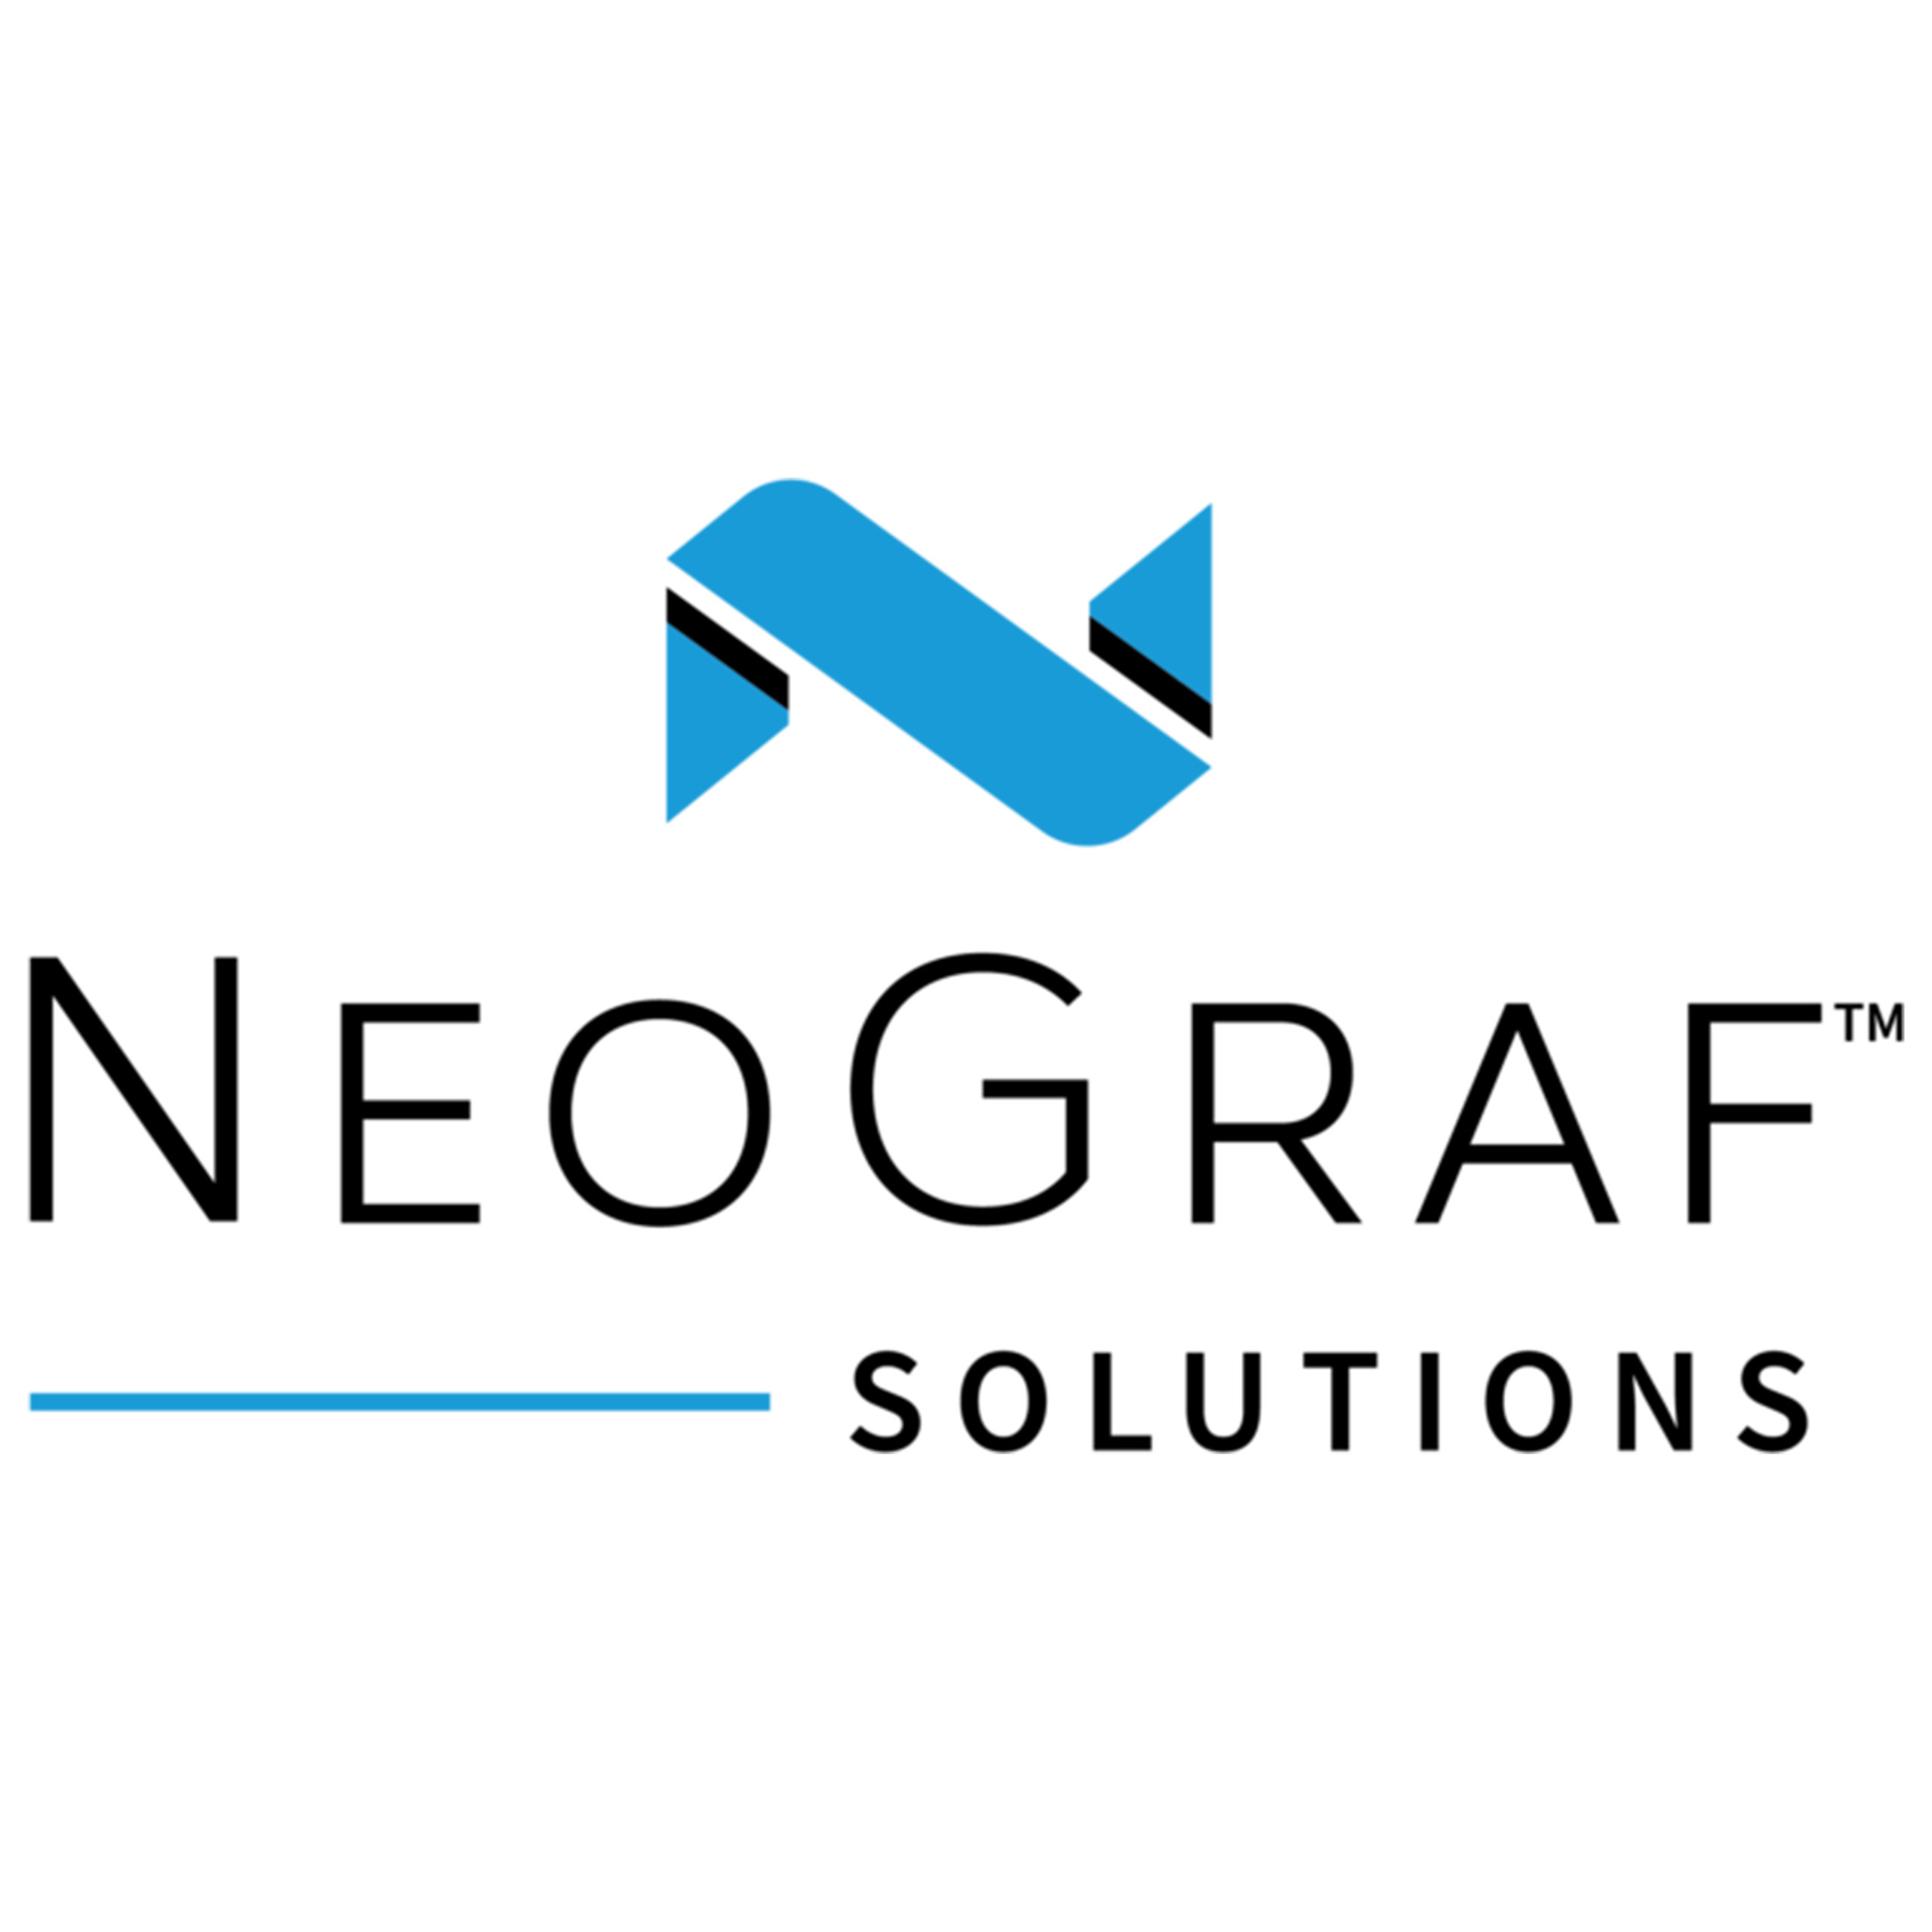 NEOGRAF Solutions LLC